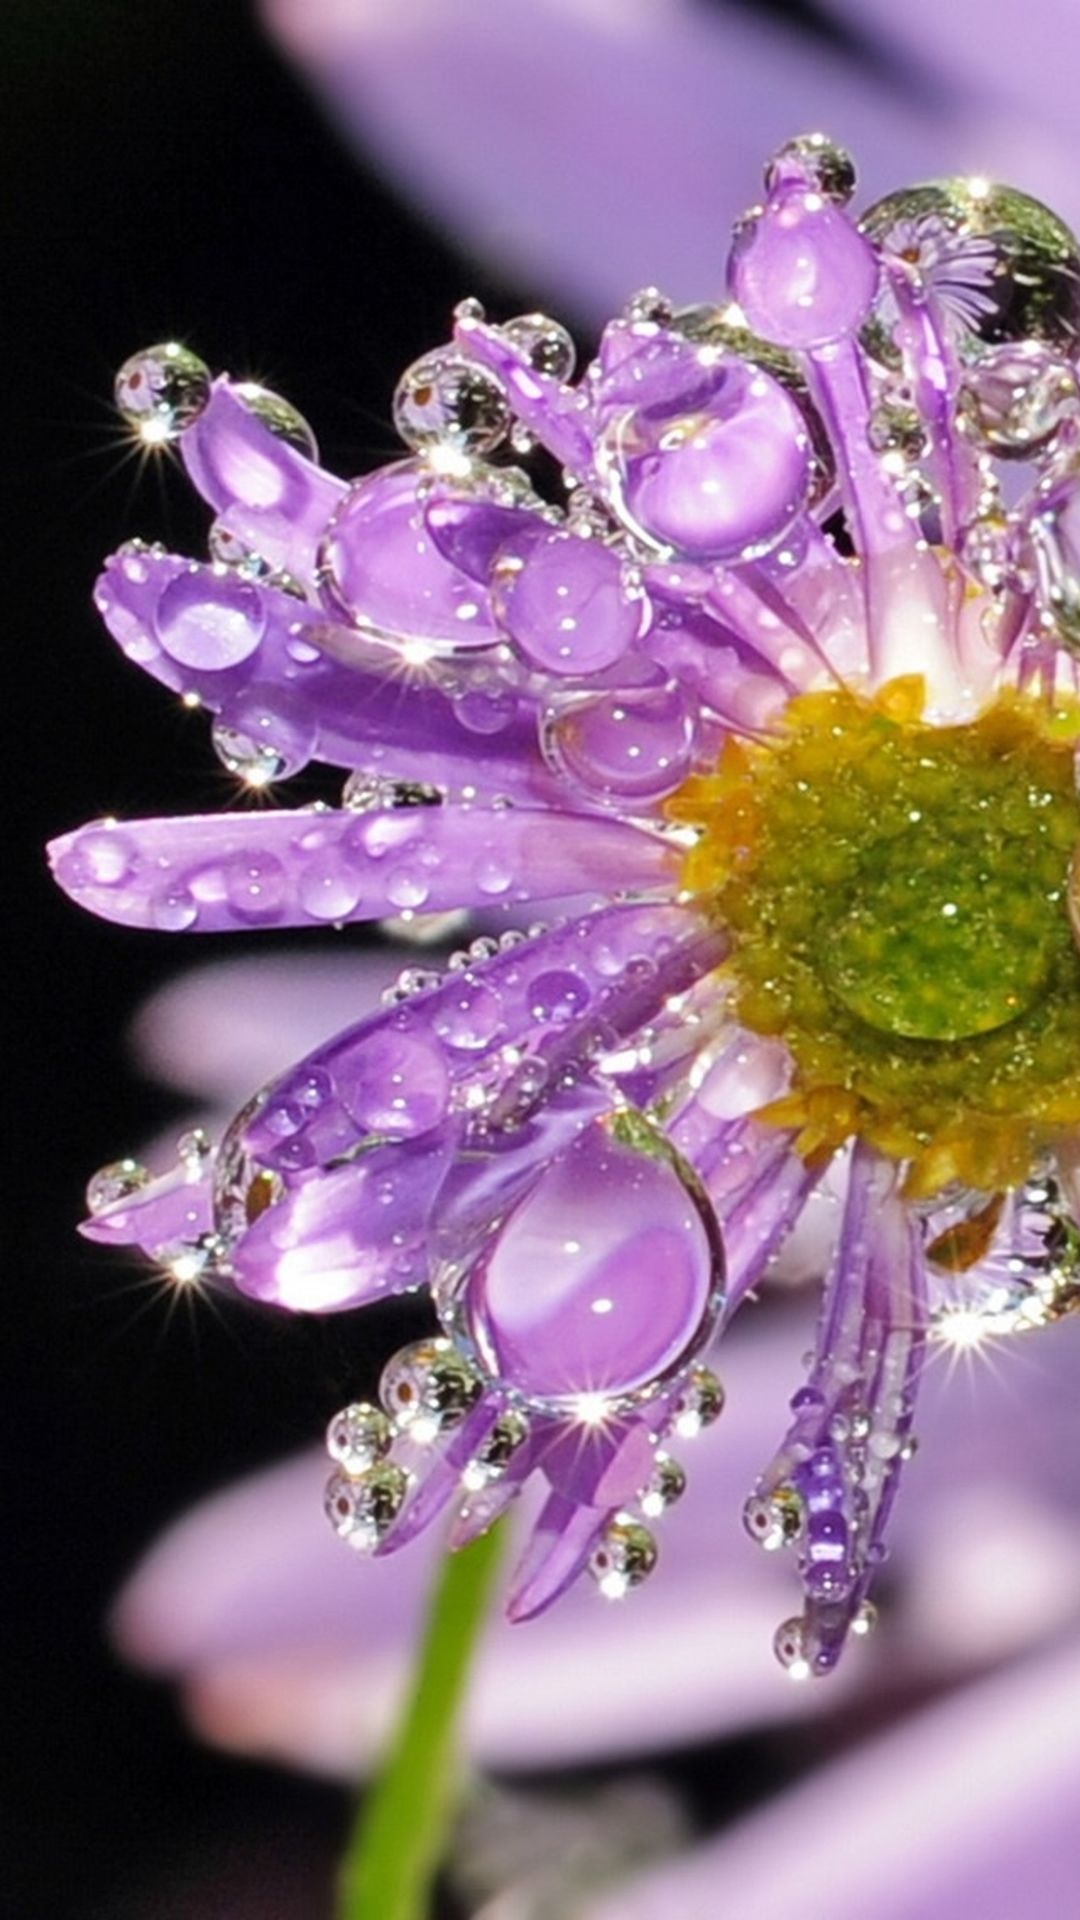 Dew Crystal Purple Daisy Flower Macro iPhone 8 Wallpaper Free Download